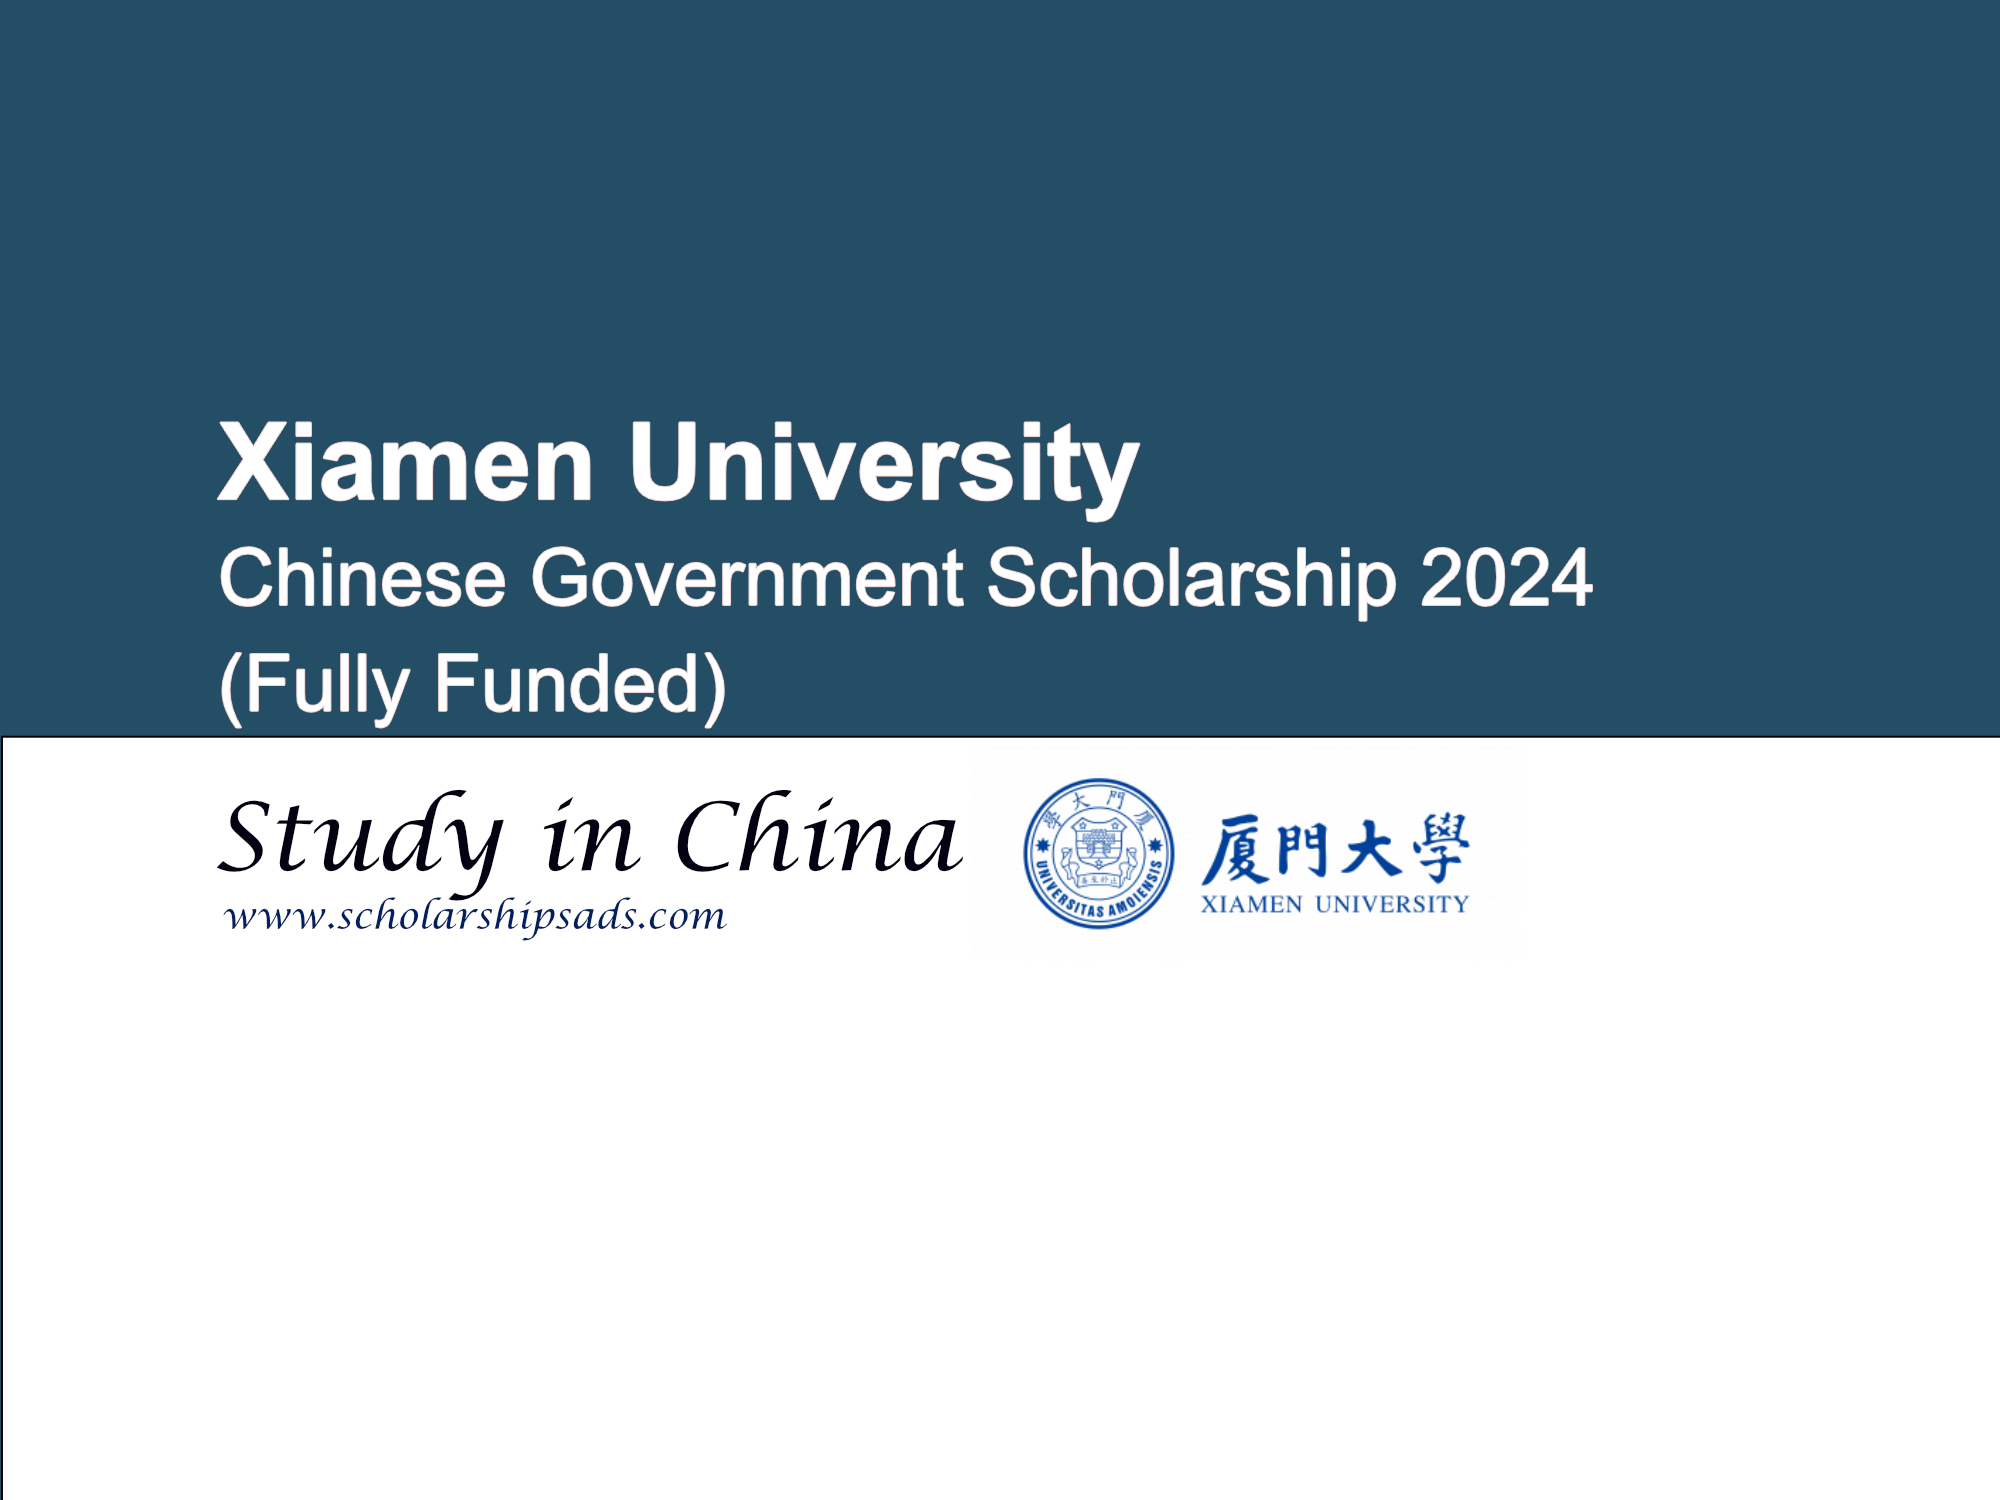 Xiamen University Chinese Government Scholarships.